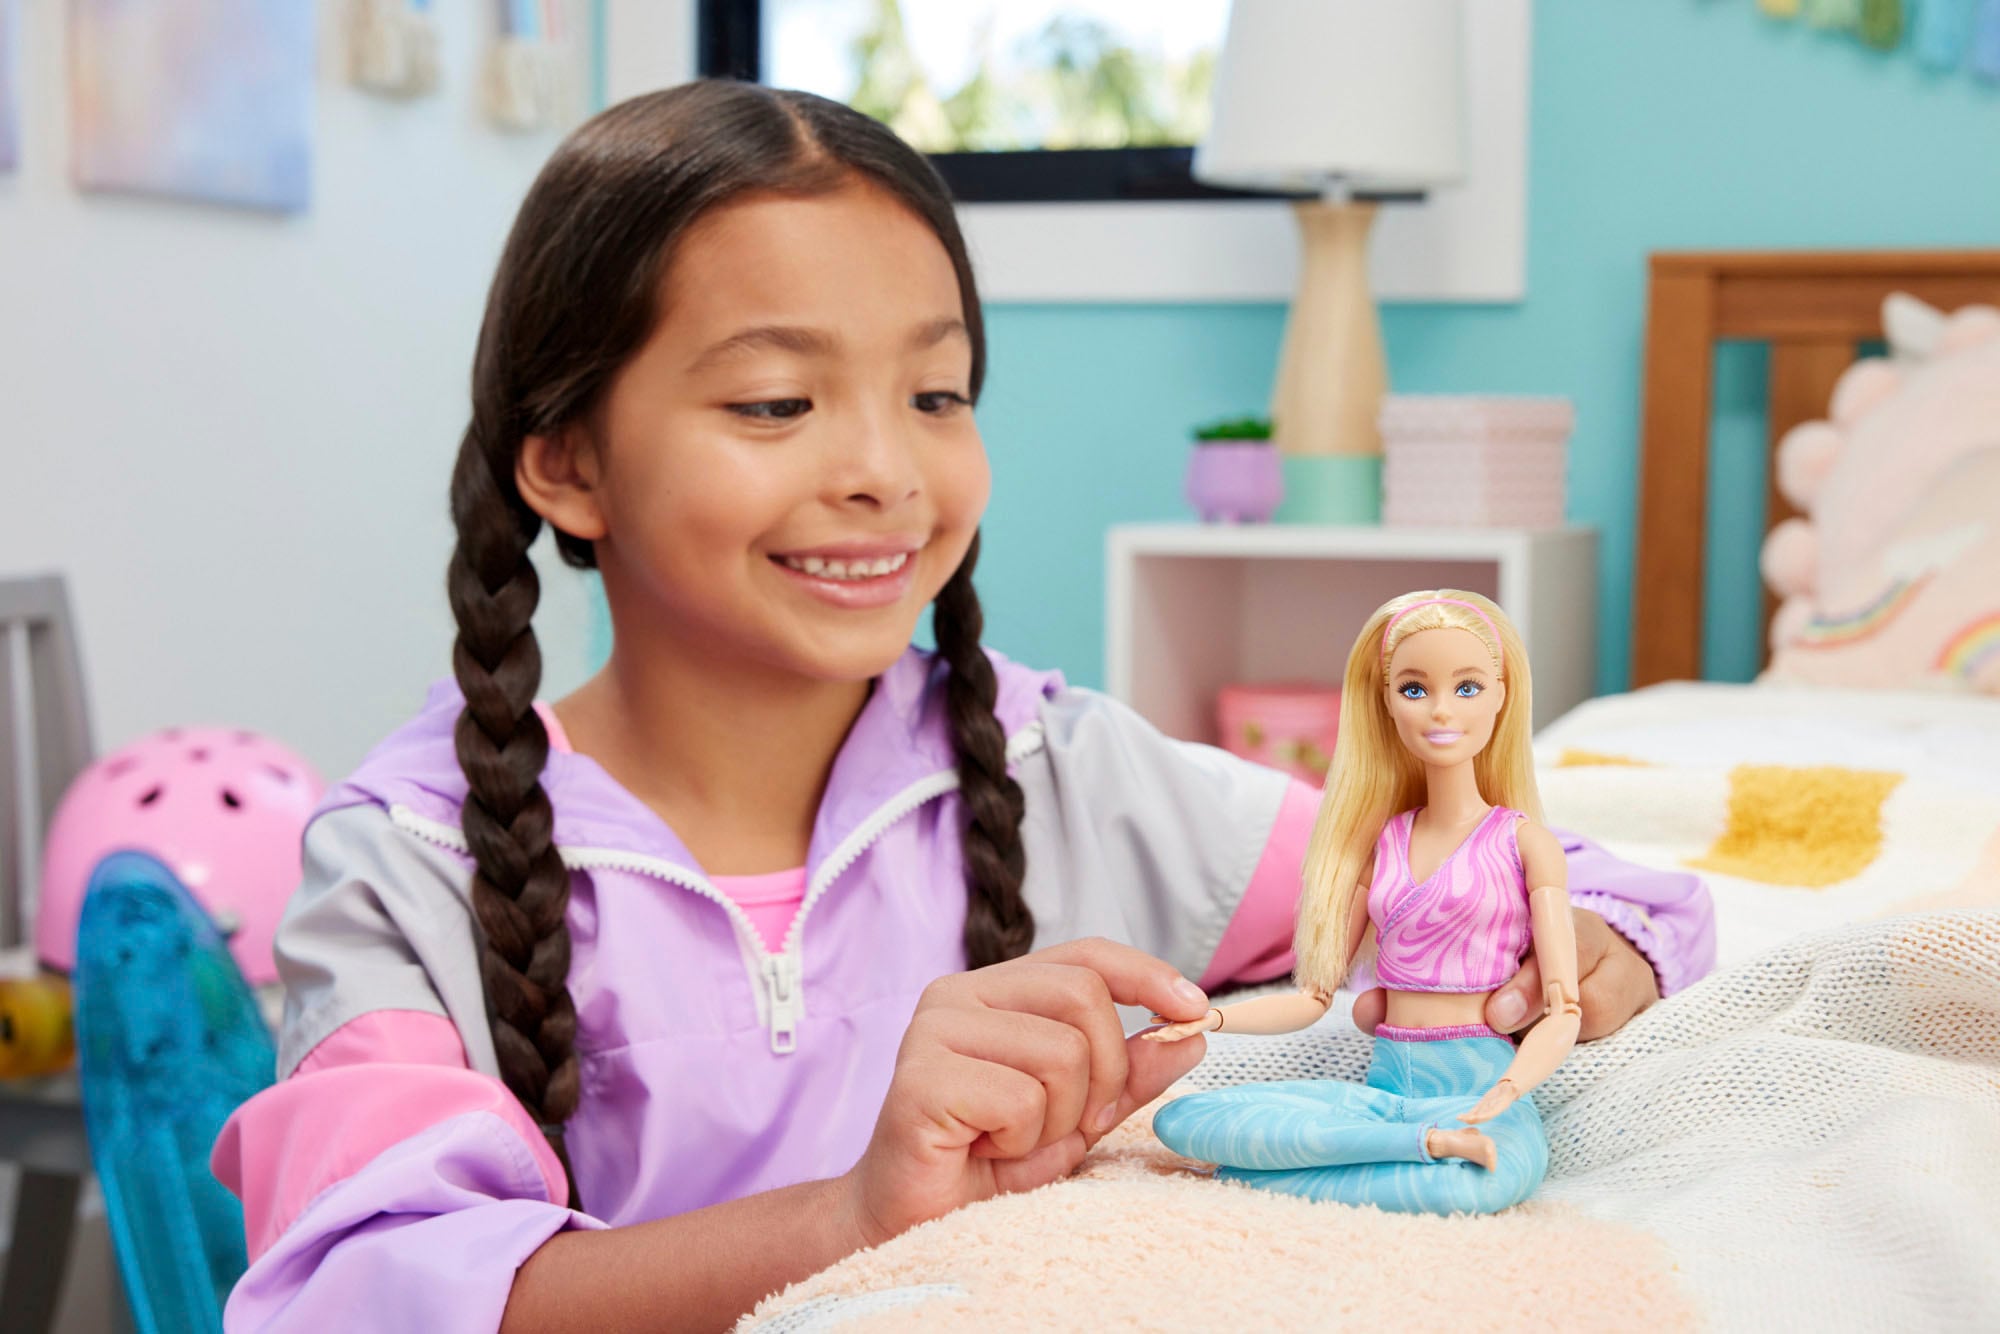 Barbie Anziehpuppe »Made to Move - mit blondem Haar«